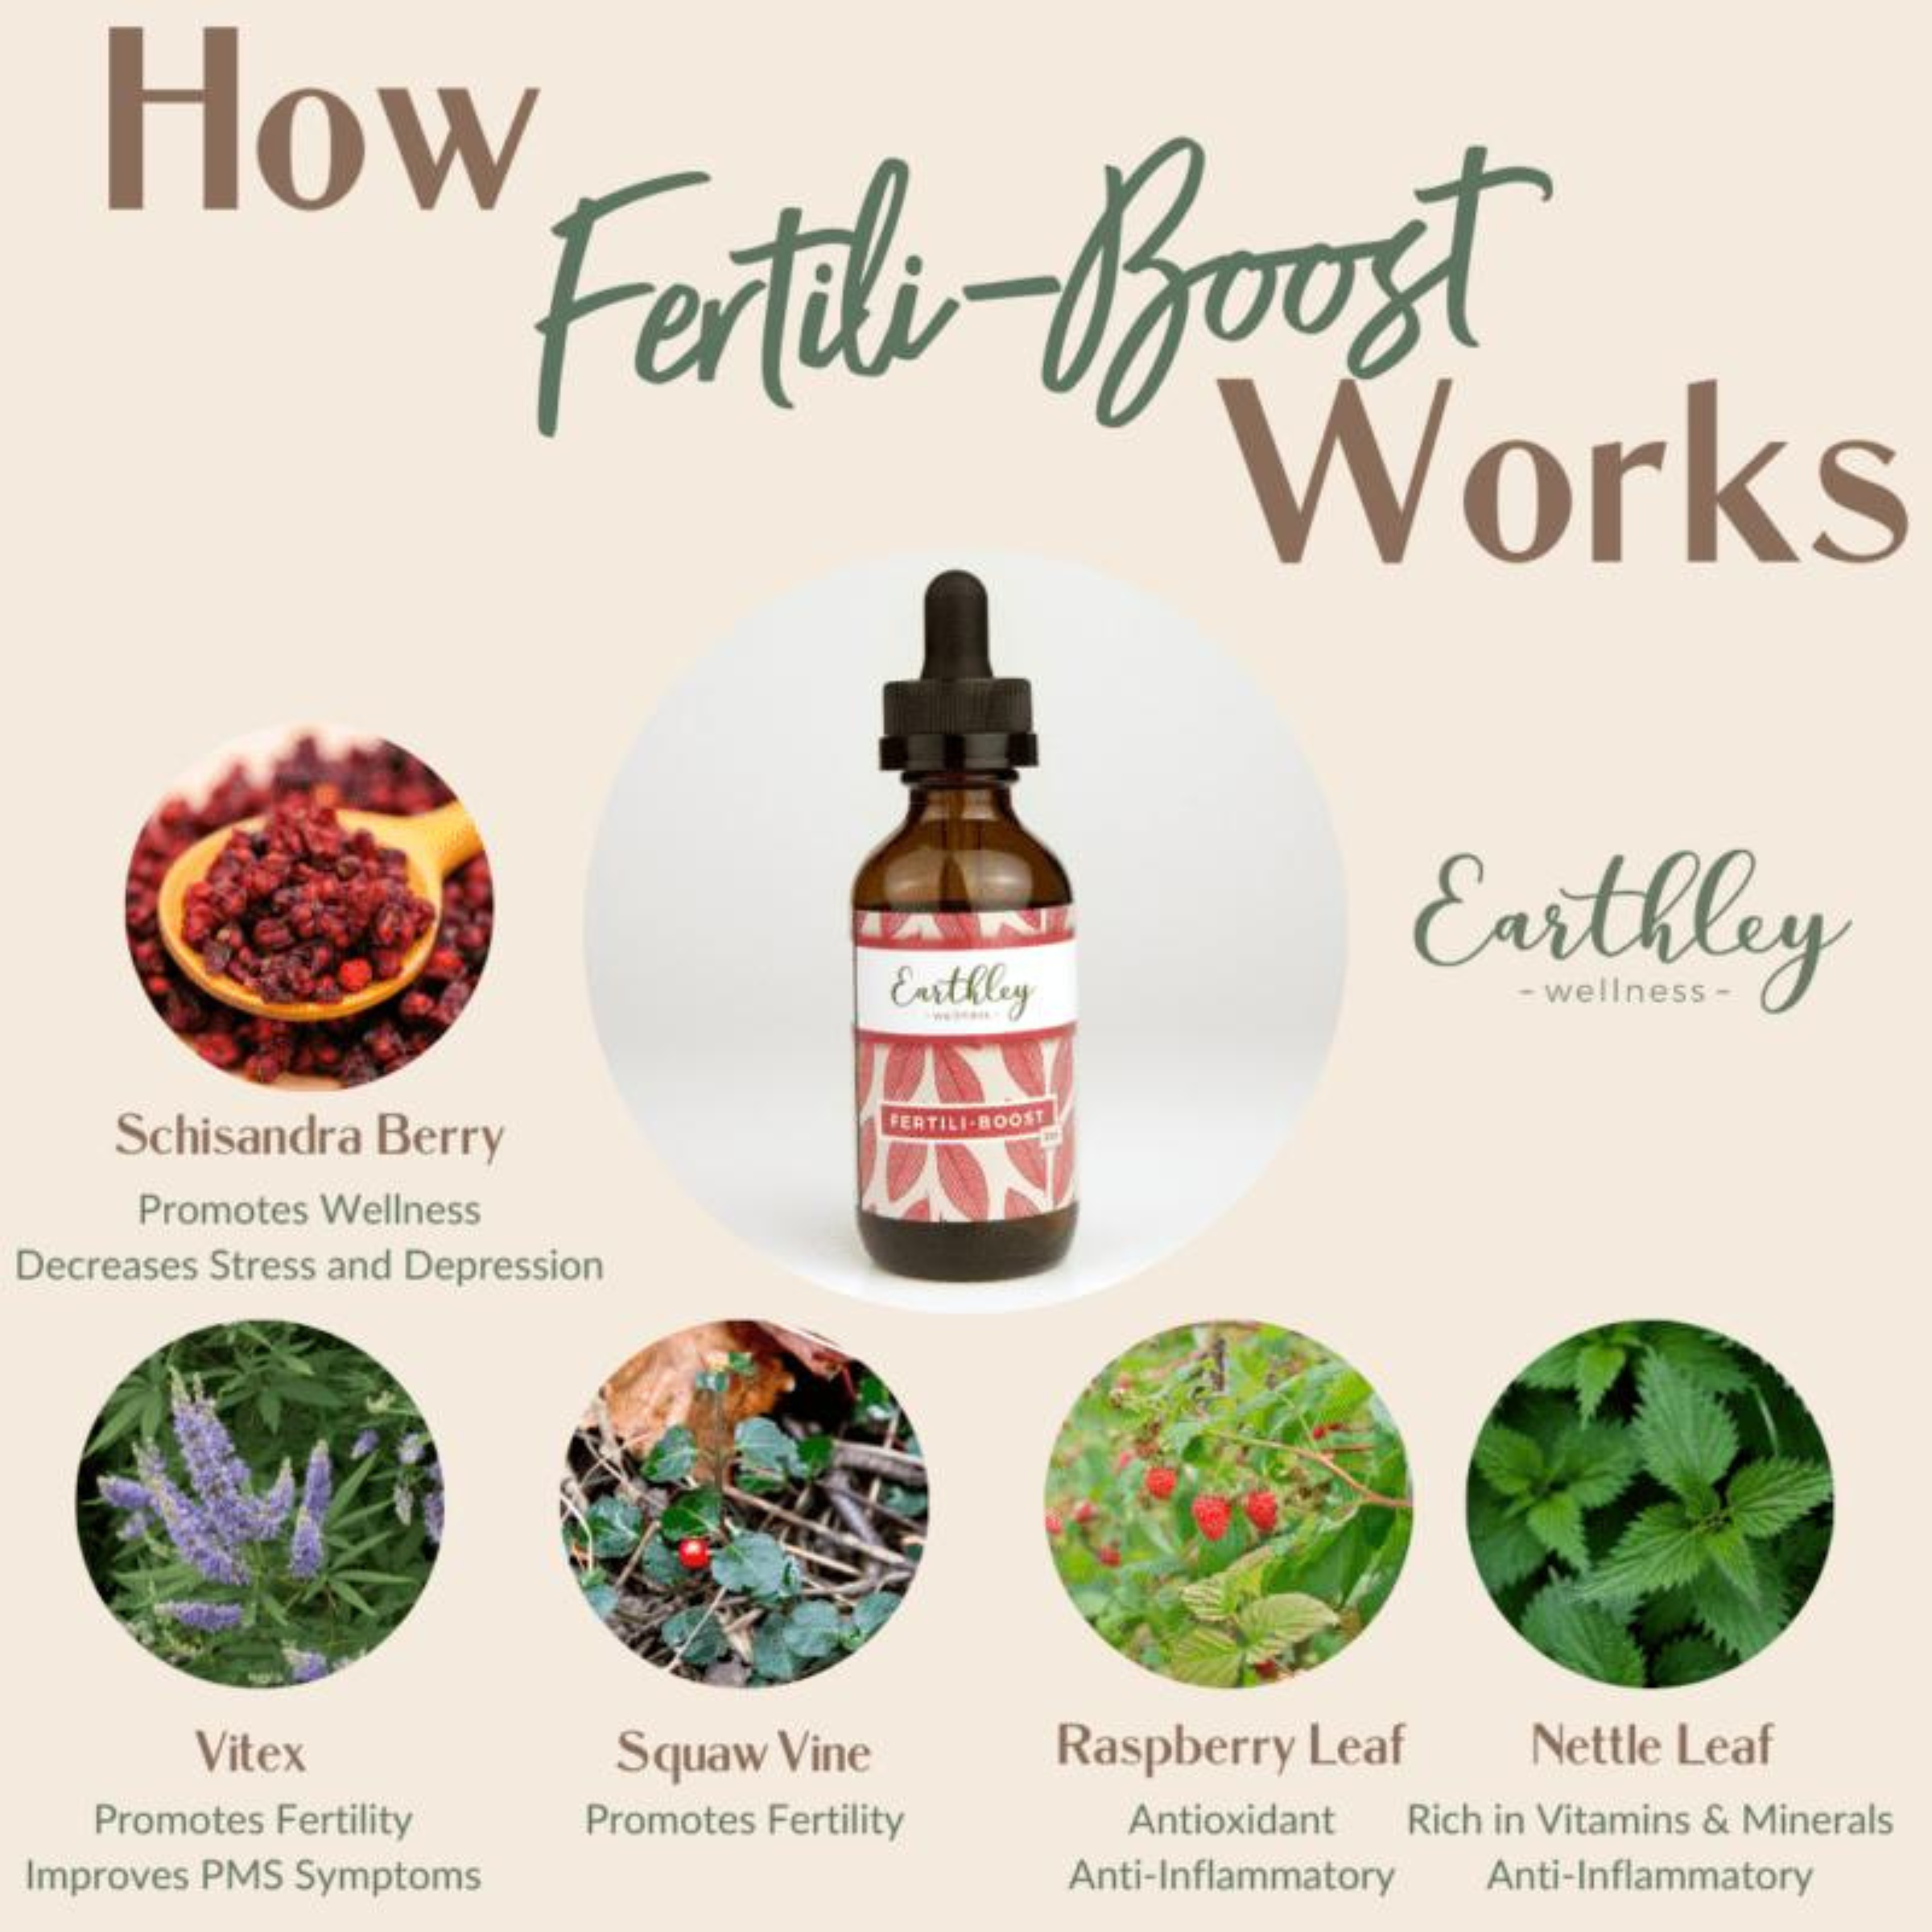 Fertili-Boost Herbal Extract